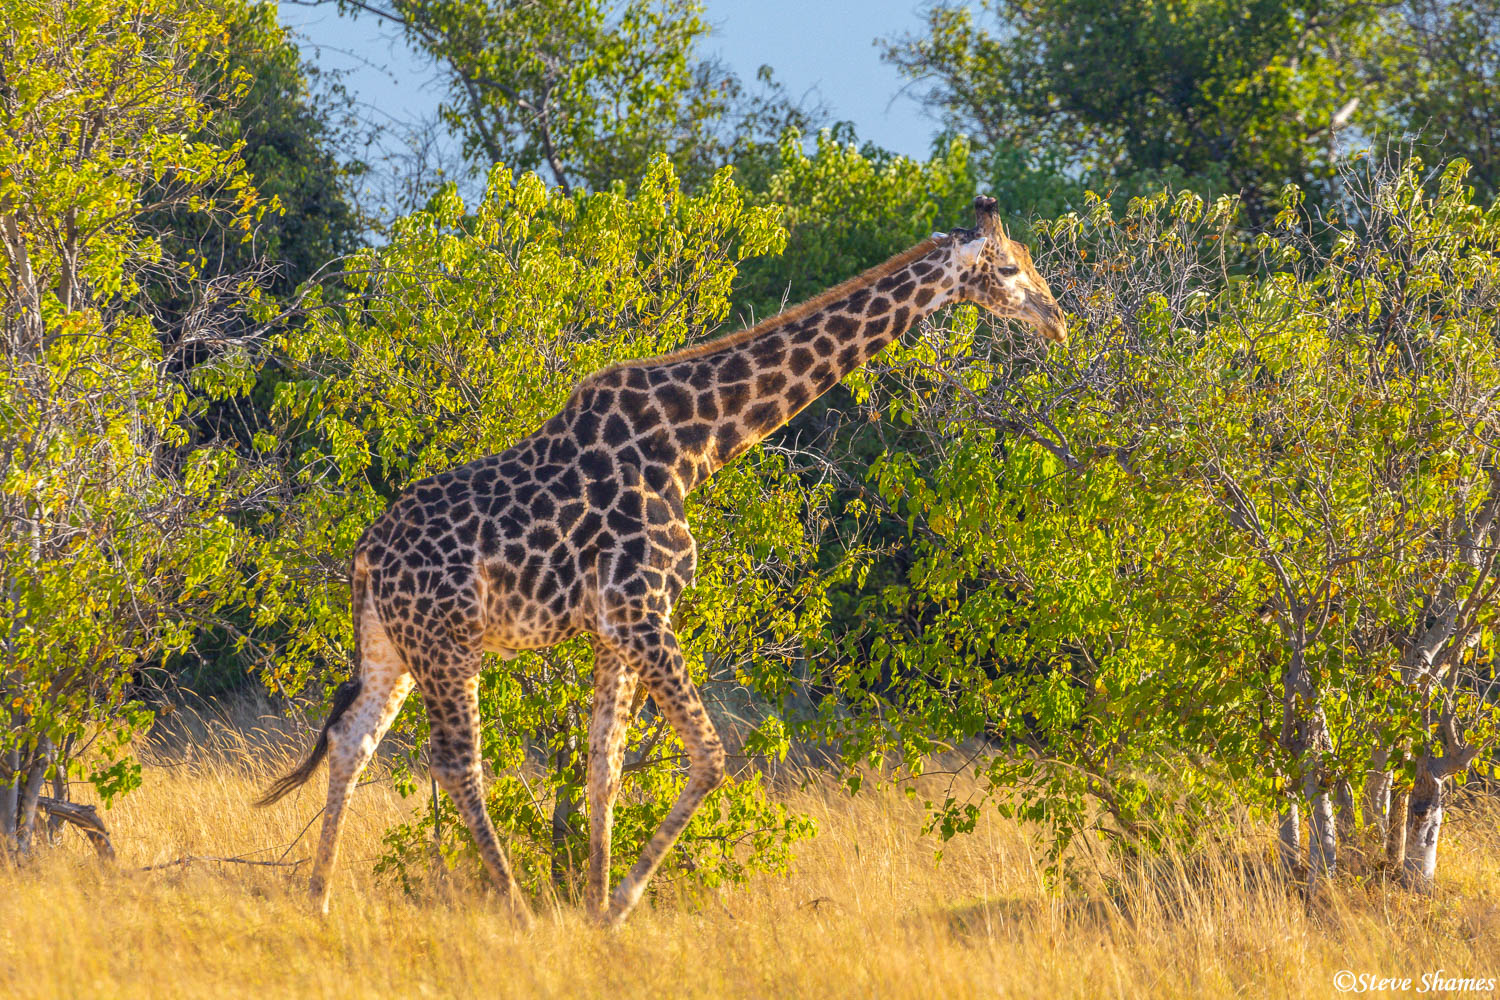 A giraffe strolling around the Moremi bush.